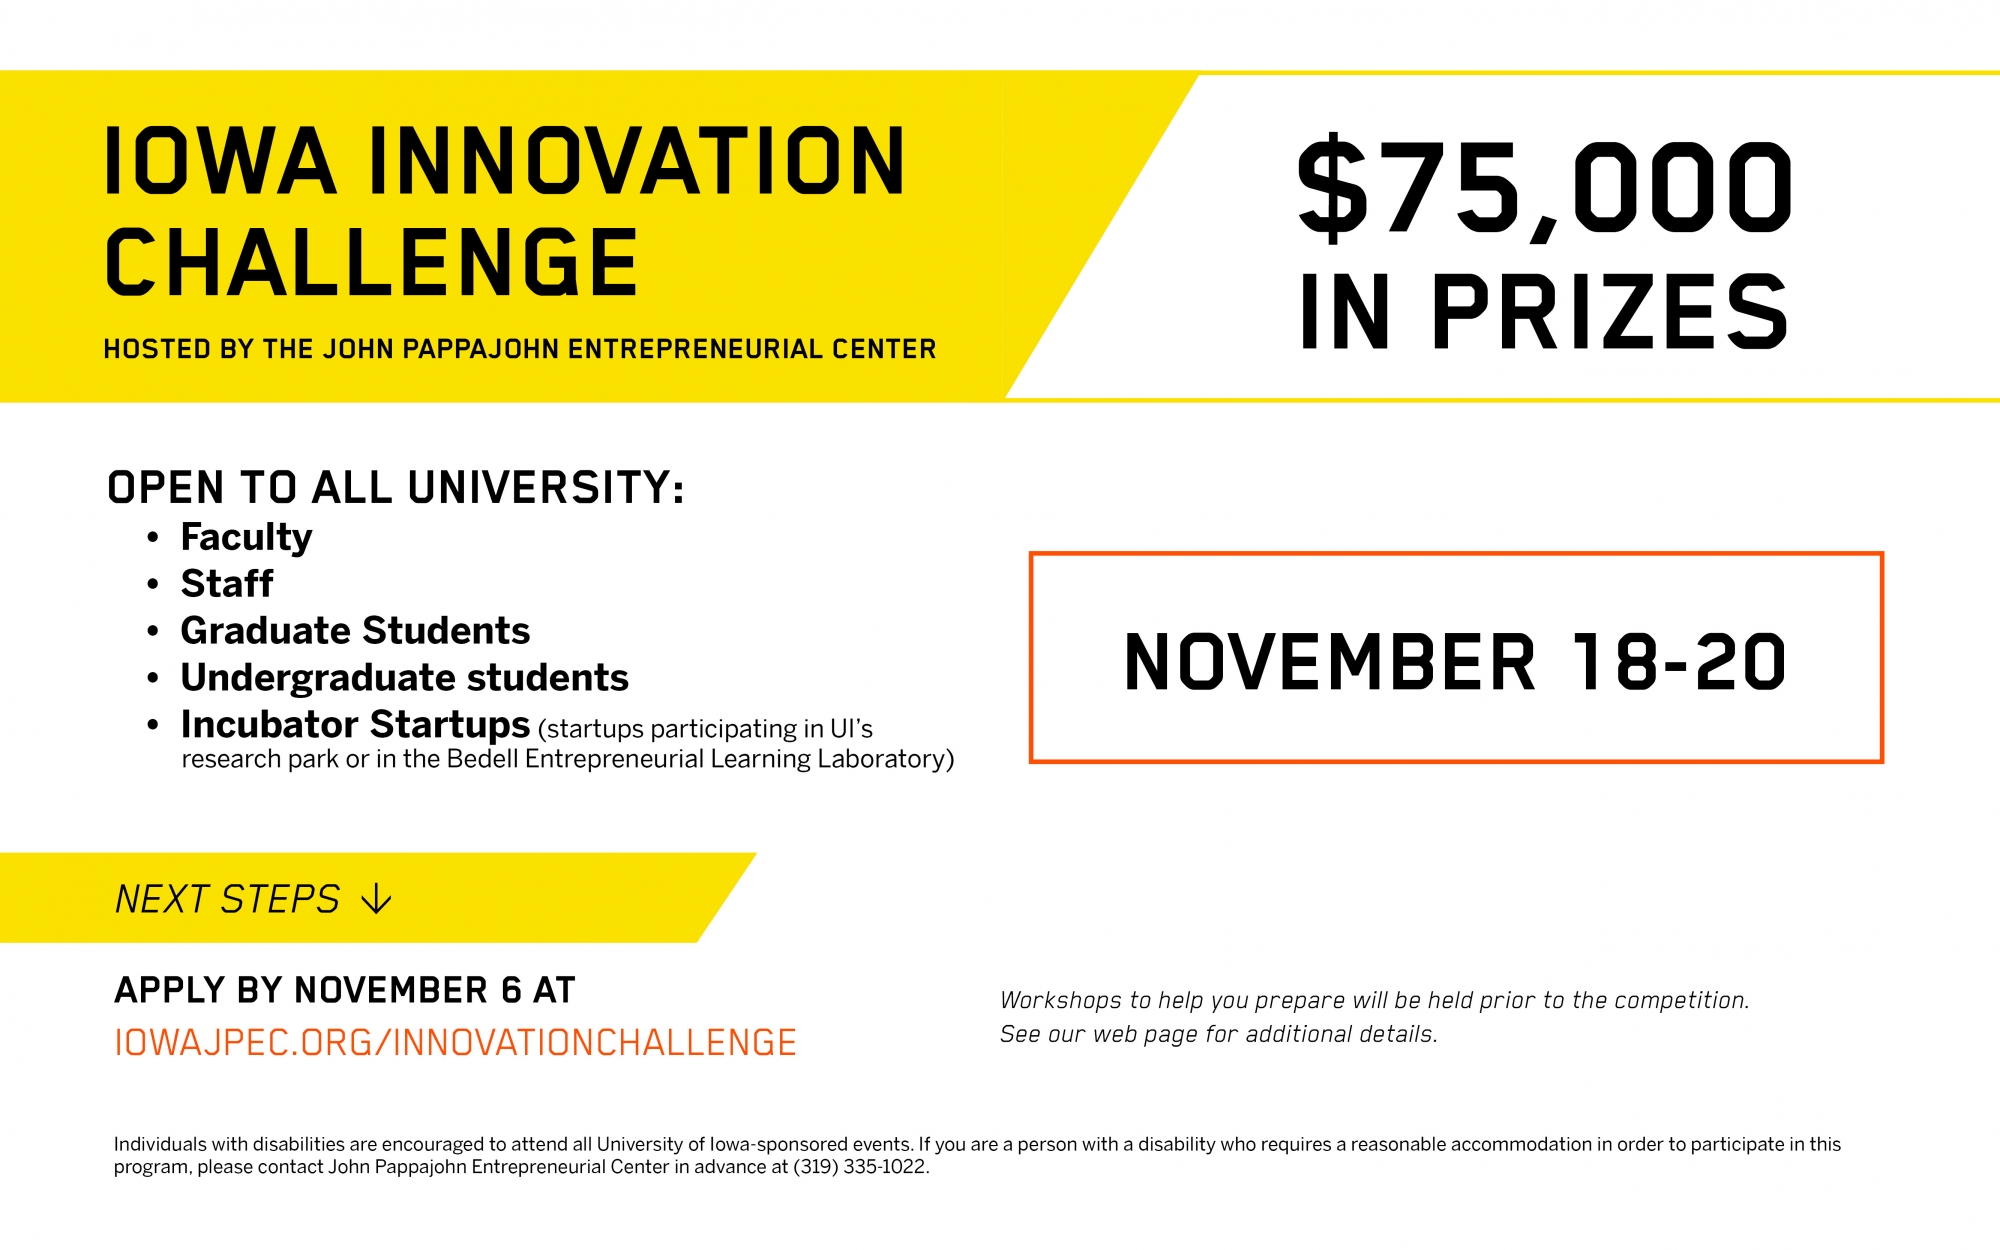 Iowa Innovation Challenge - November 18-20